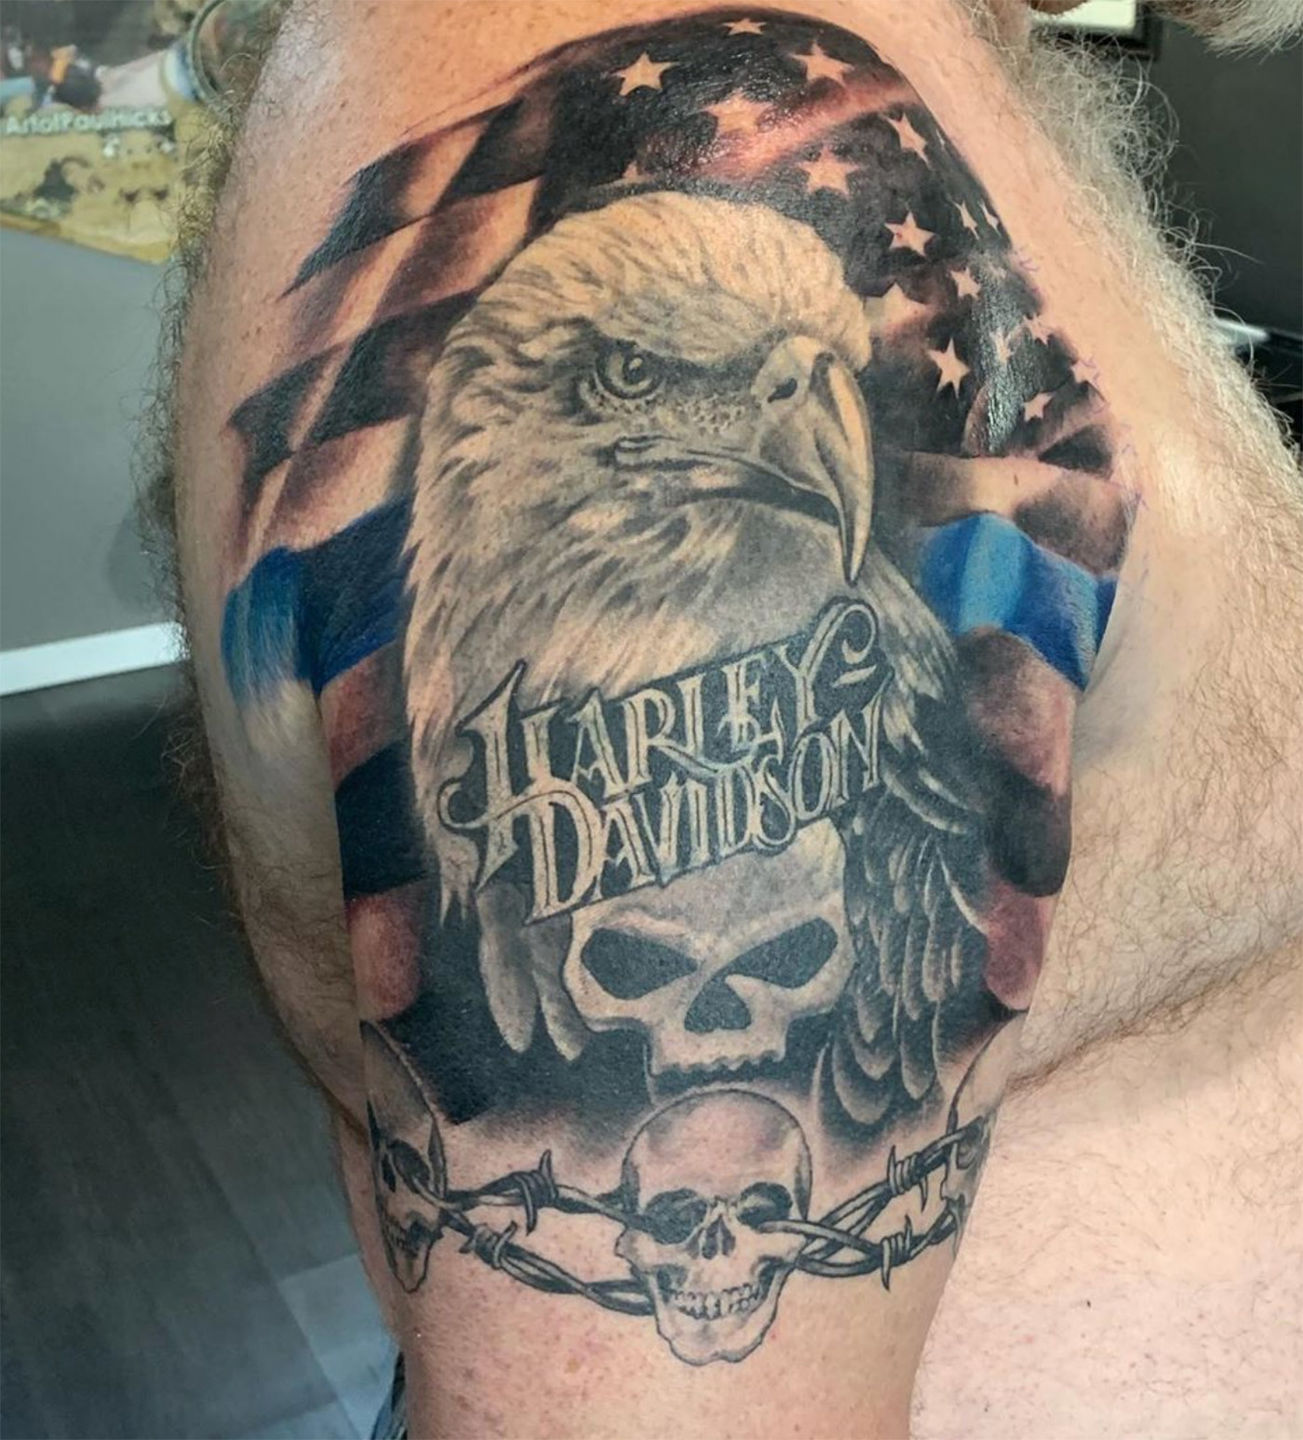 Tattoo of Harleydavidson Logos Eagles